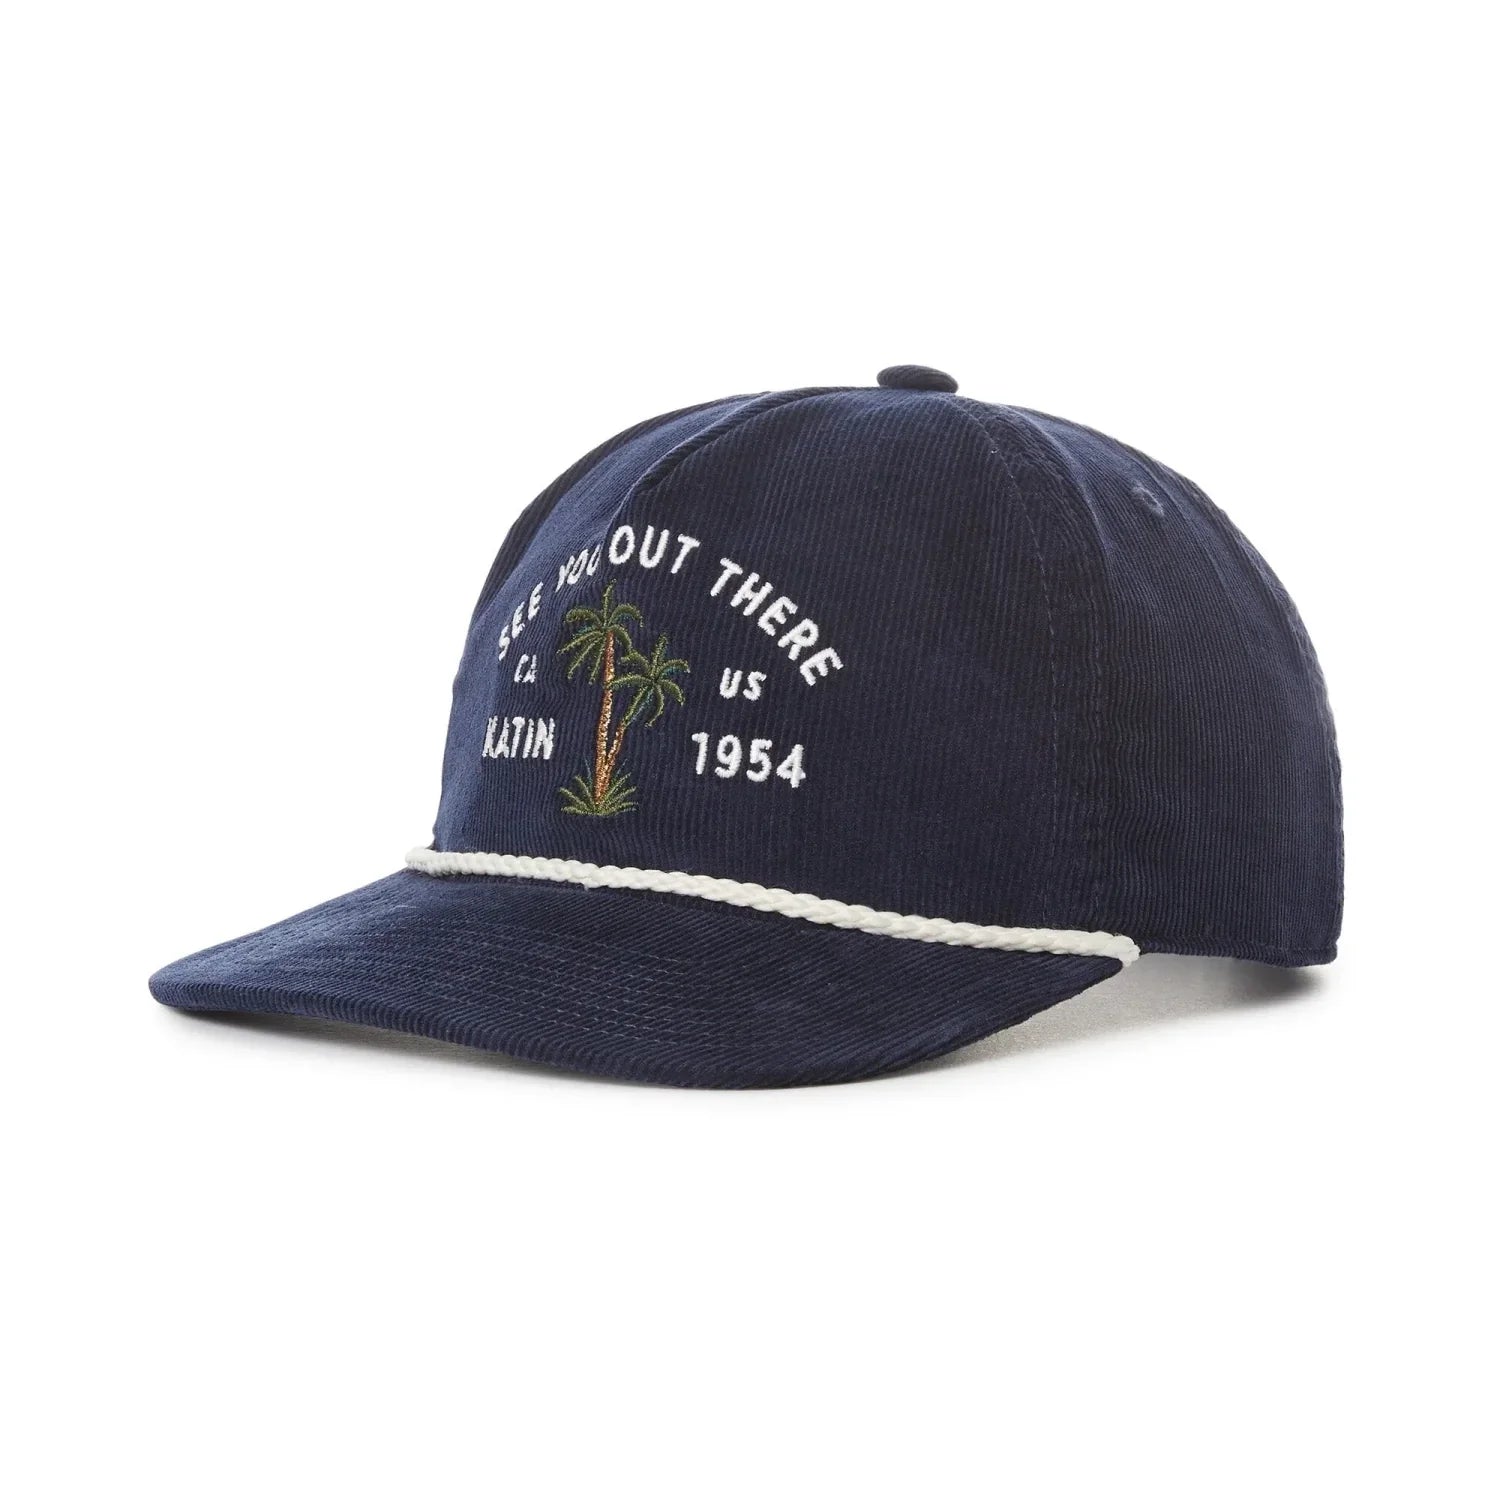 Katin 20. HATS_GLOVES_SCARVES - HATS Bermuda Hat NAVY NAVY O/S